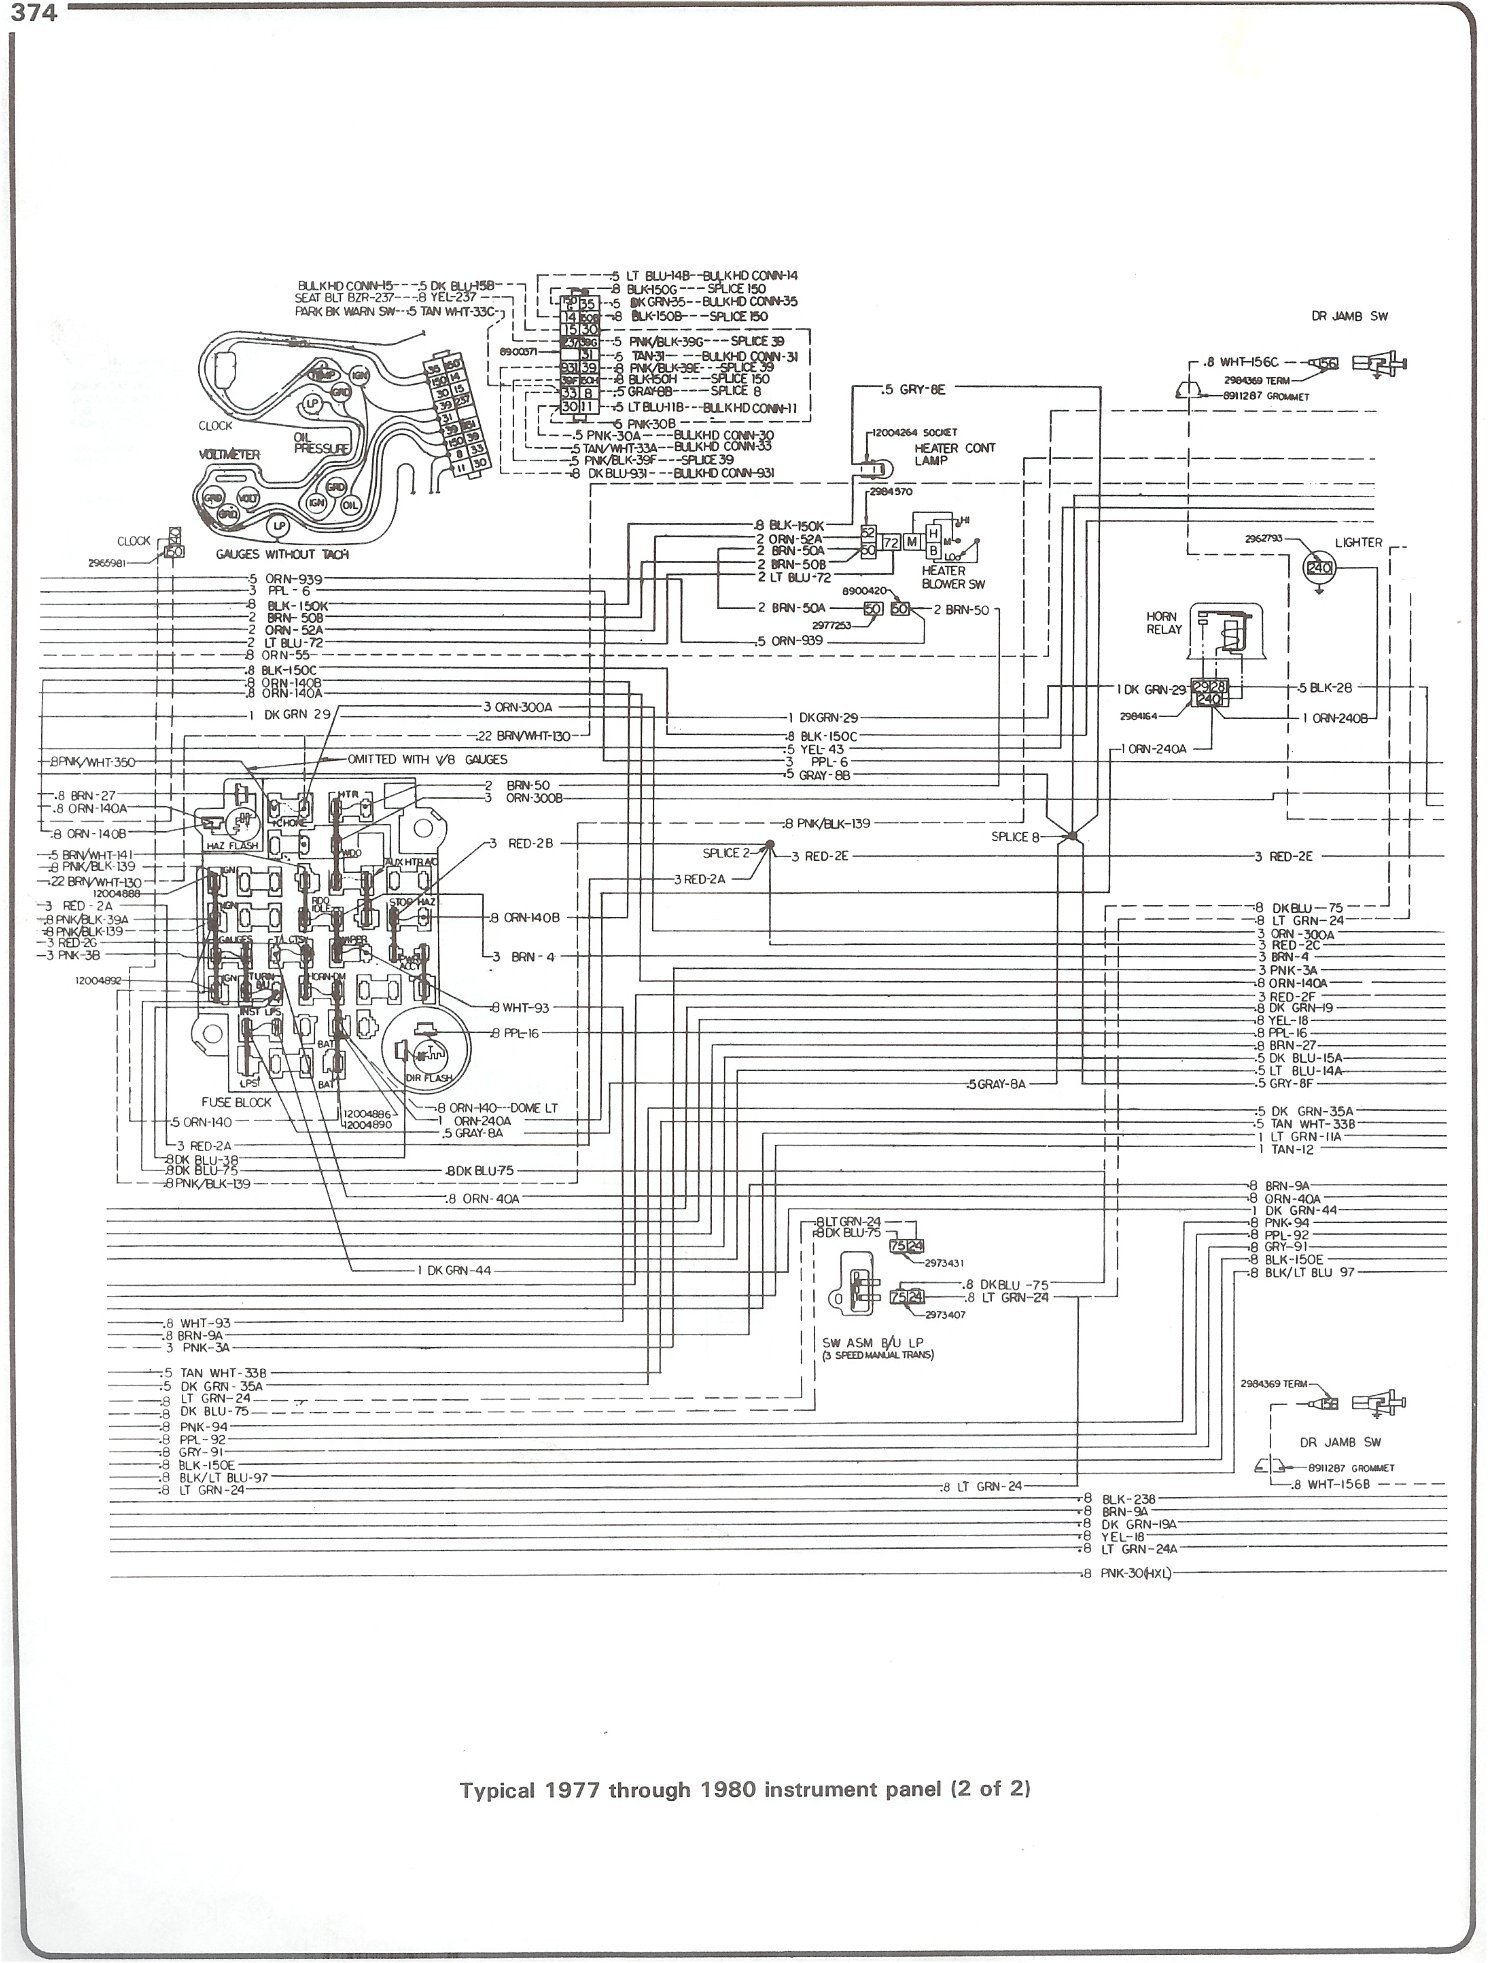 1993 Toyota Pickup Wiring Diagram from detoxicrecenze.com